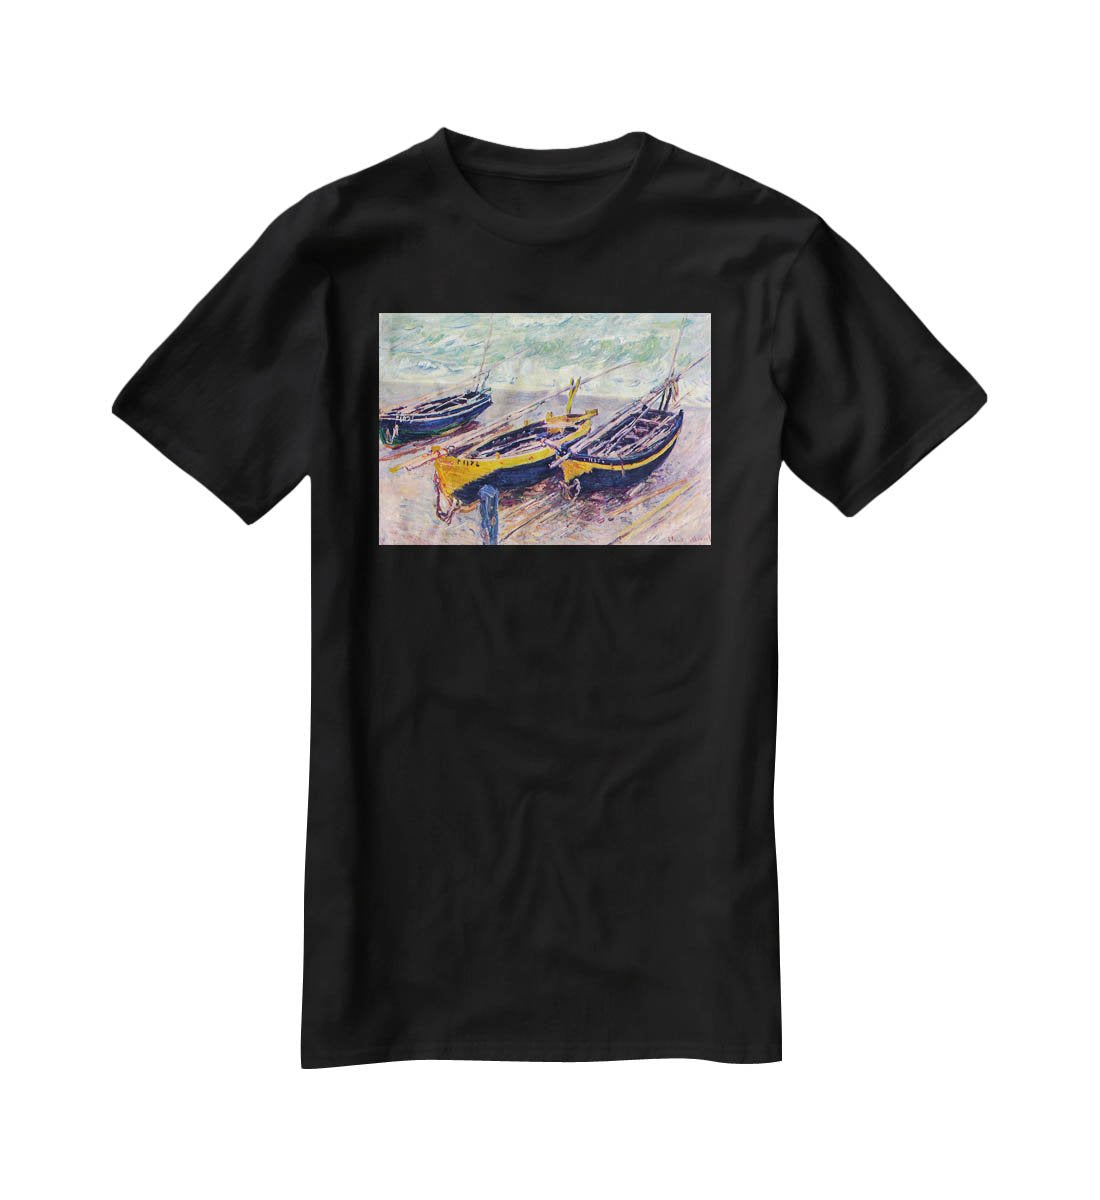 Dock of etretat three fishing boats by Monet T-Shirt - Canvas Art Rocks - 1